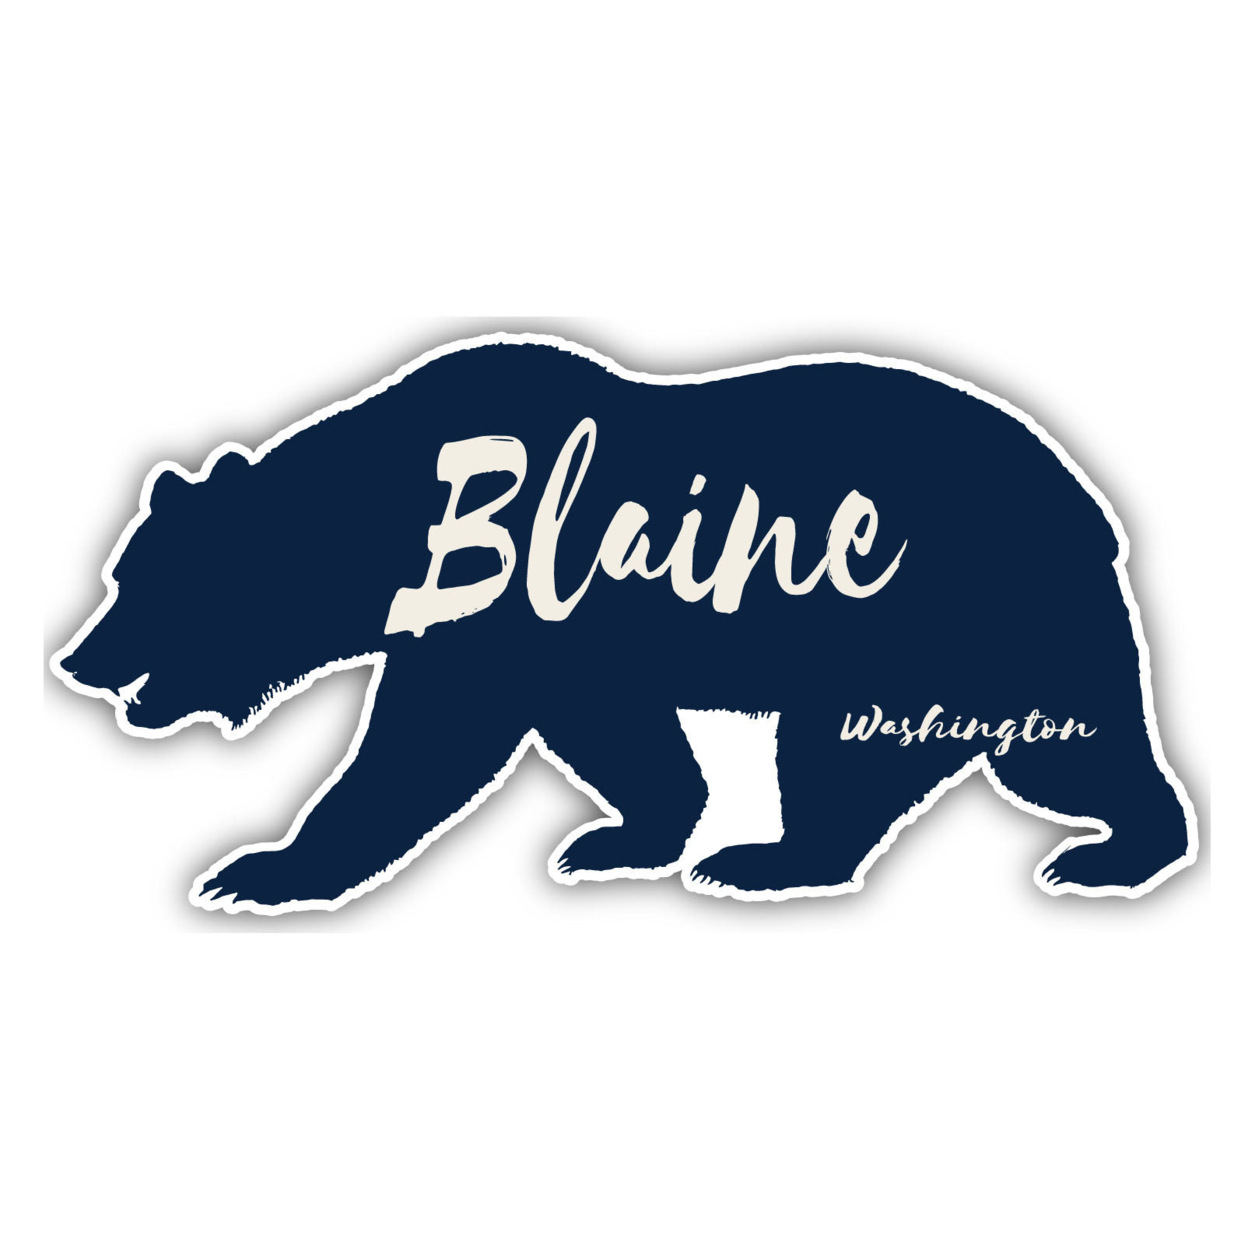 Blaine Washington Souvenir Decorative Stickers (Choose Theme And Size) - Single Unit, 2-Inch, Adventures Awaits